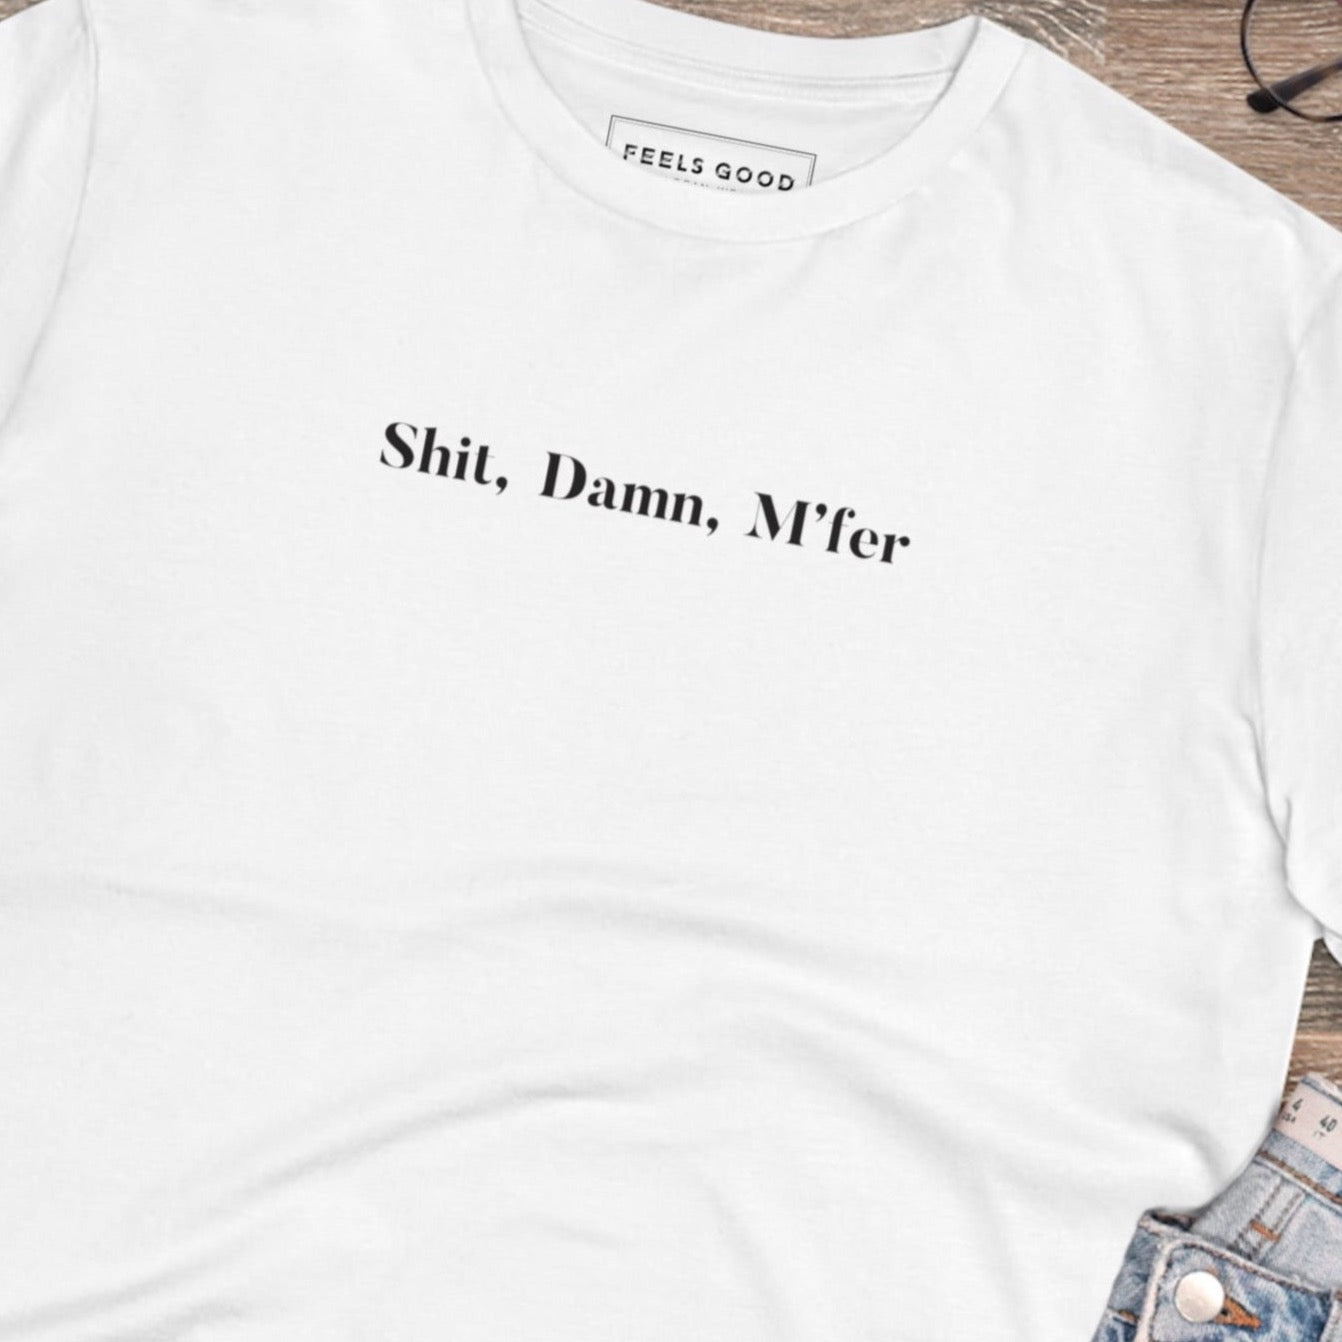 Urban 'Shit, Damn, M'fer' D'Angelo Organic Cotton T-shirt - Hip Hop Tshirt